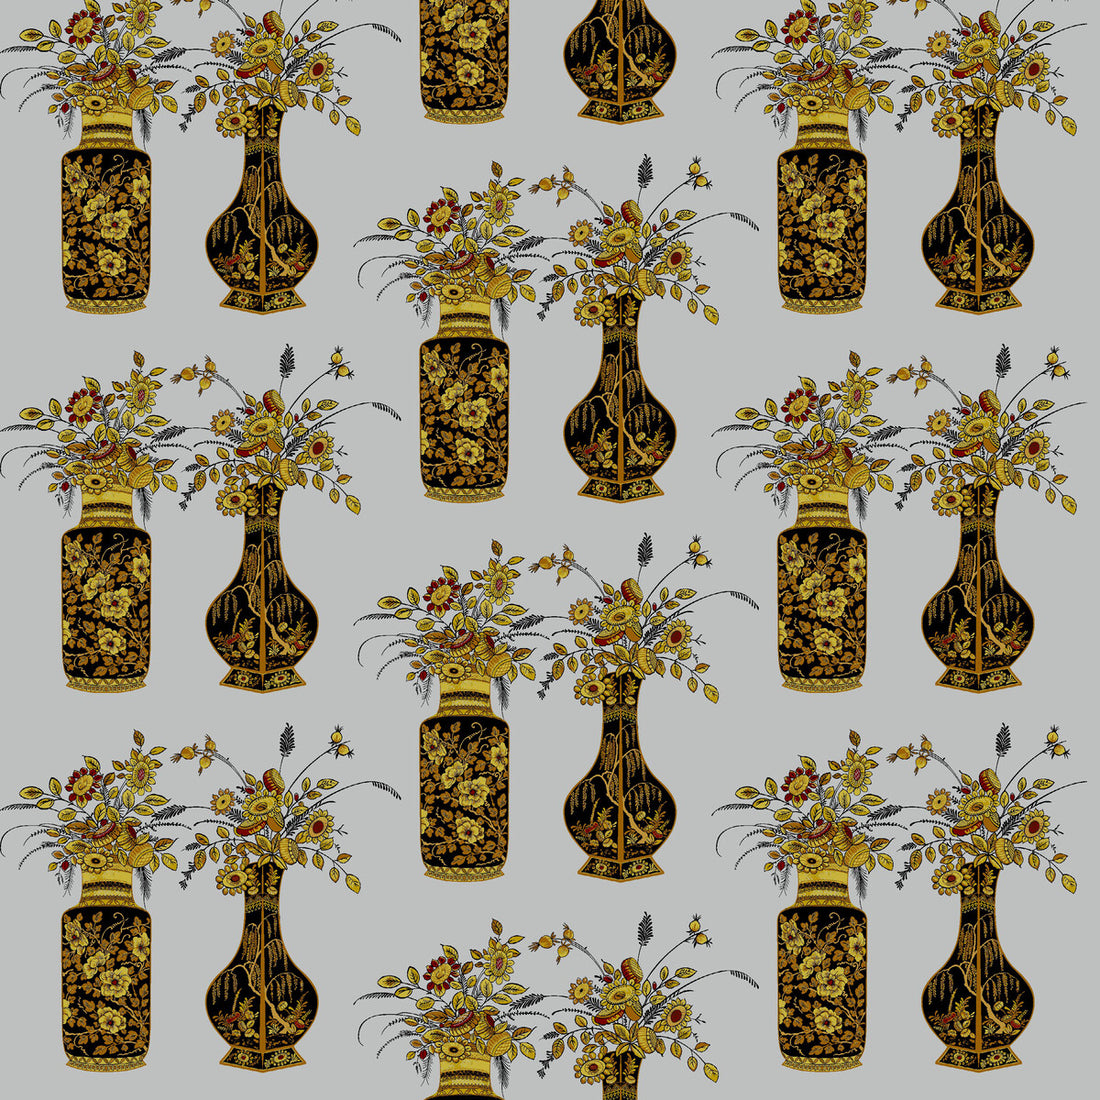 Casilda fabric in plata color - pattern LCT5466.001.0 - by Gaston y Daniela in the Lorenzo Castillo IV collection